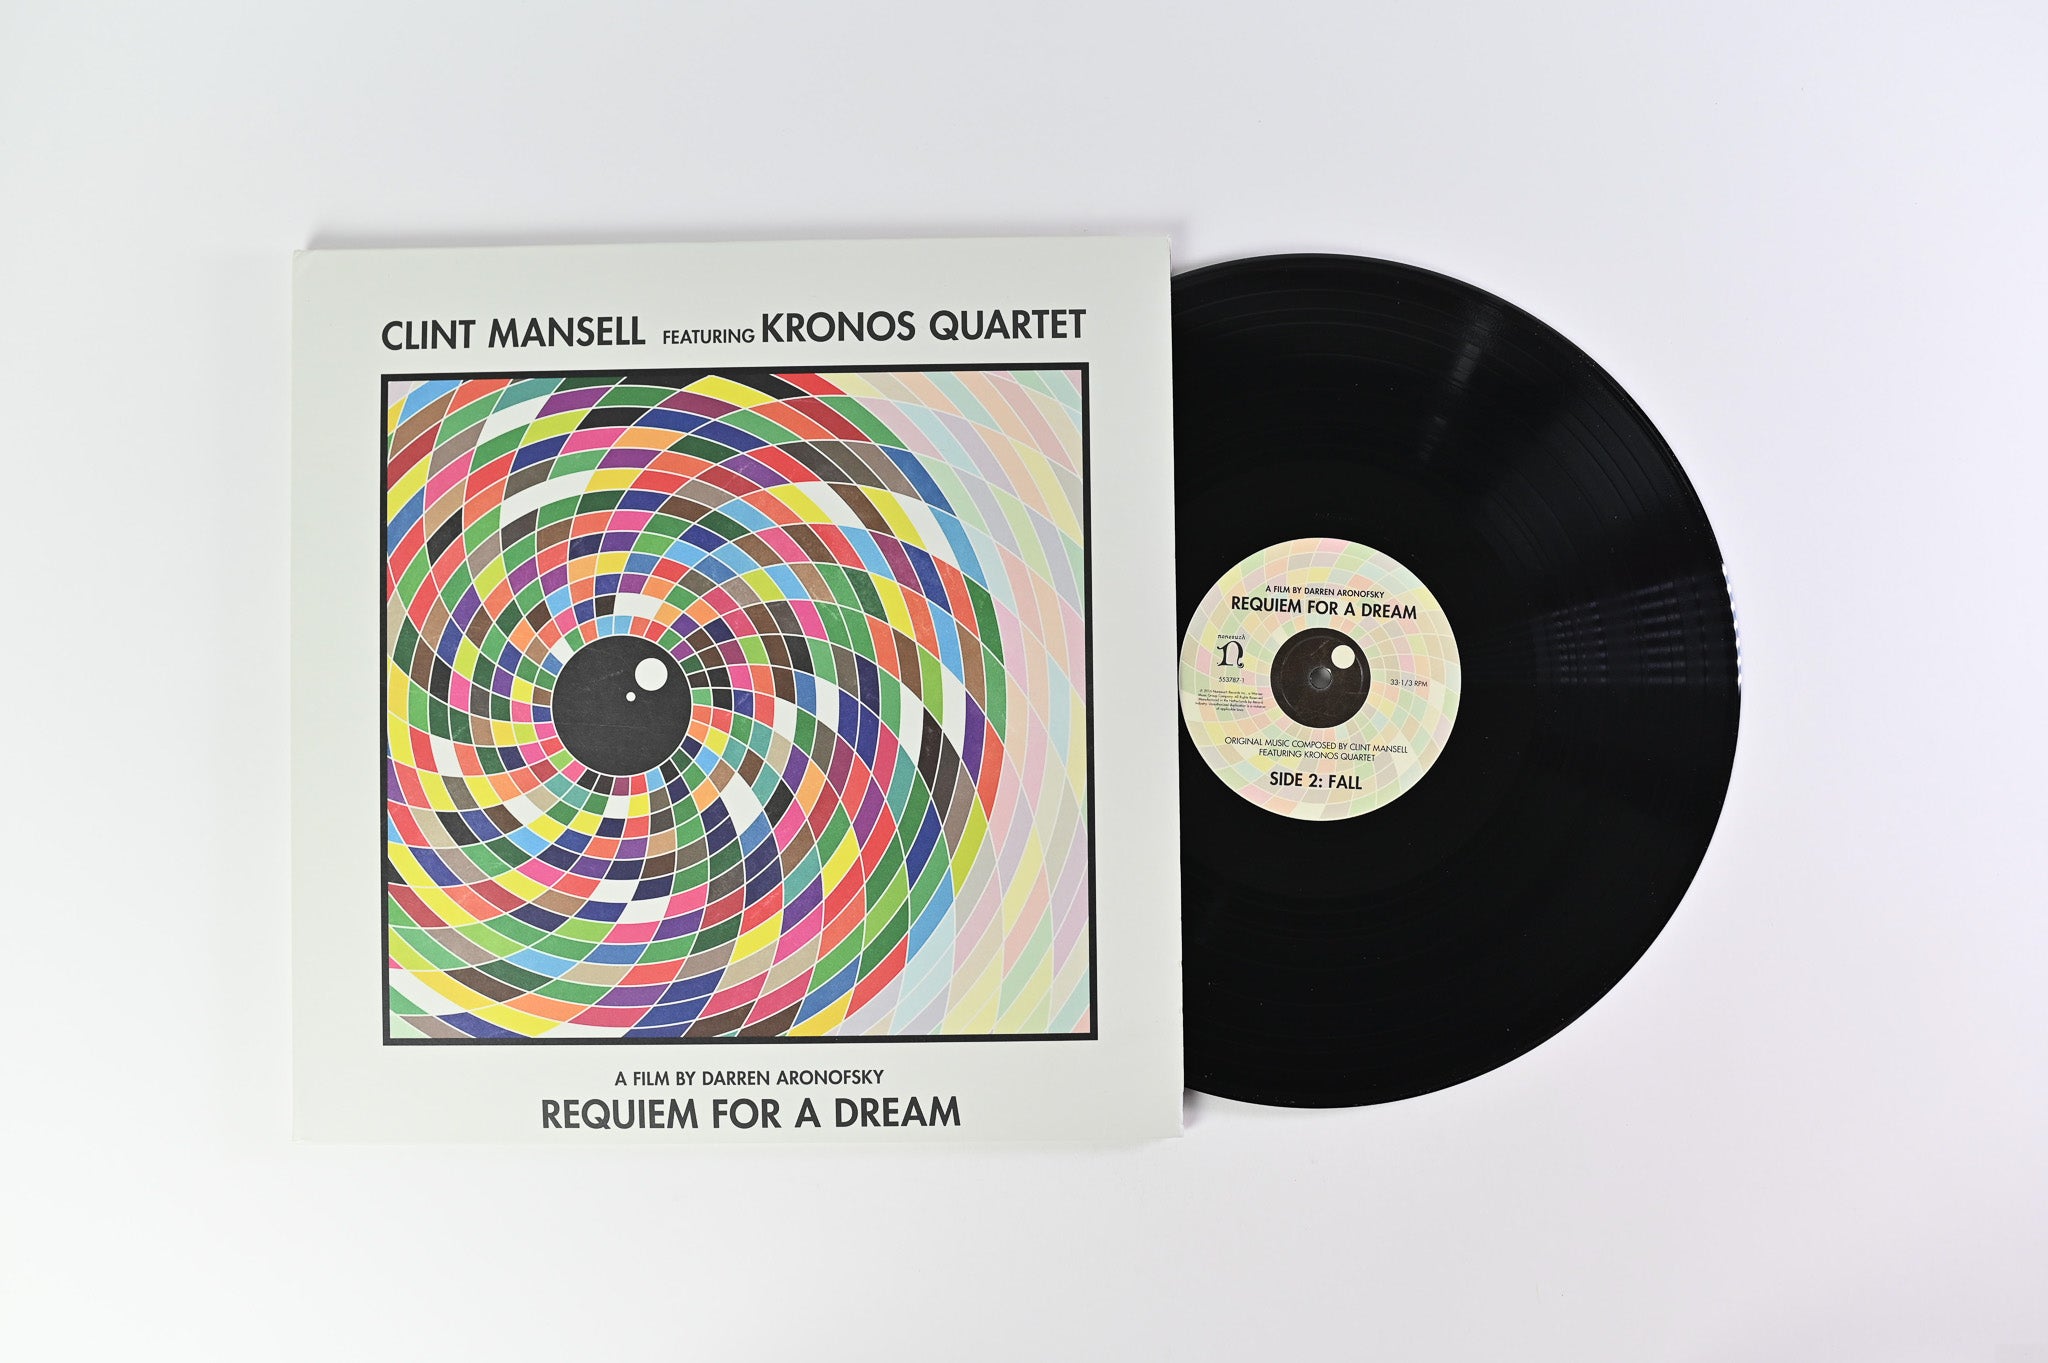 Clint Mansell featuring Kronos Quartet - Requiem For A Dream Nonesuch Ltd RSD 2016 Reissue